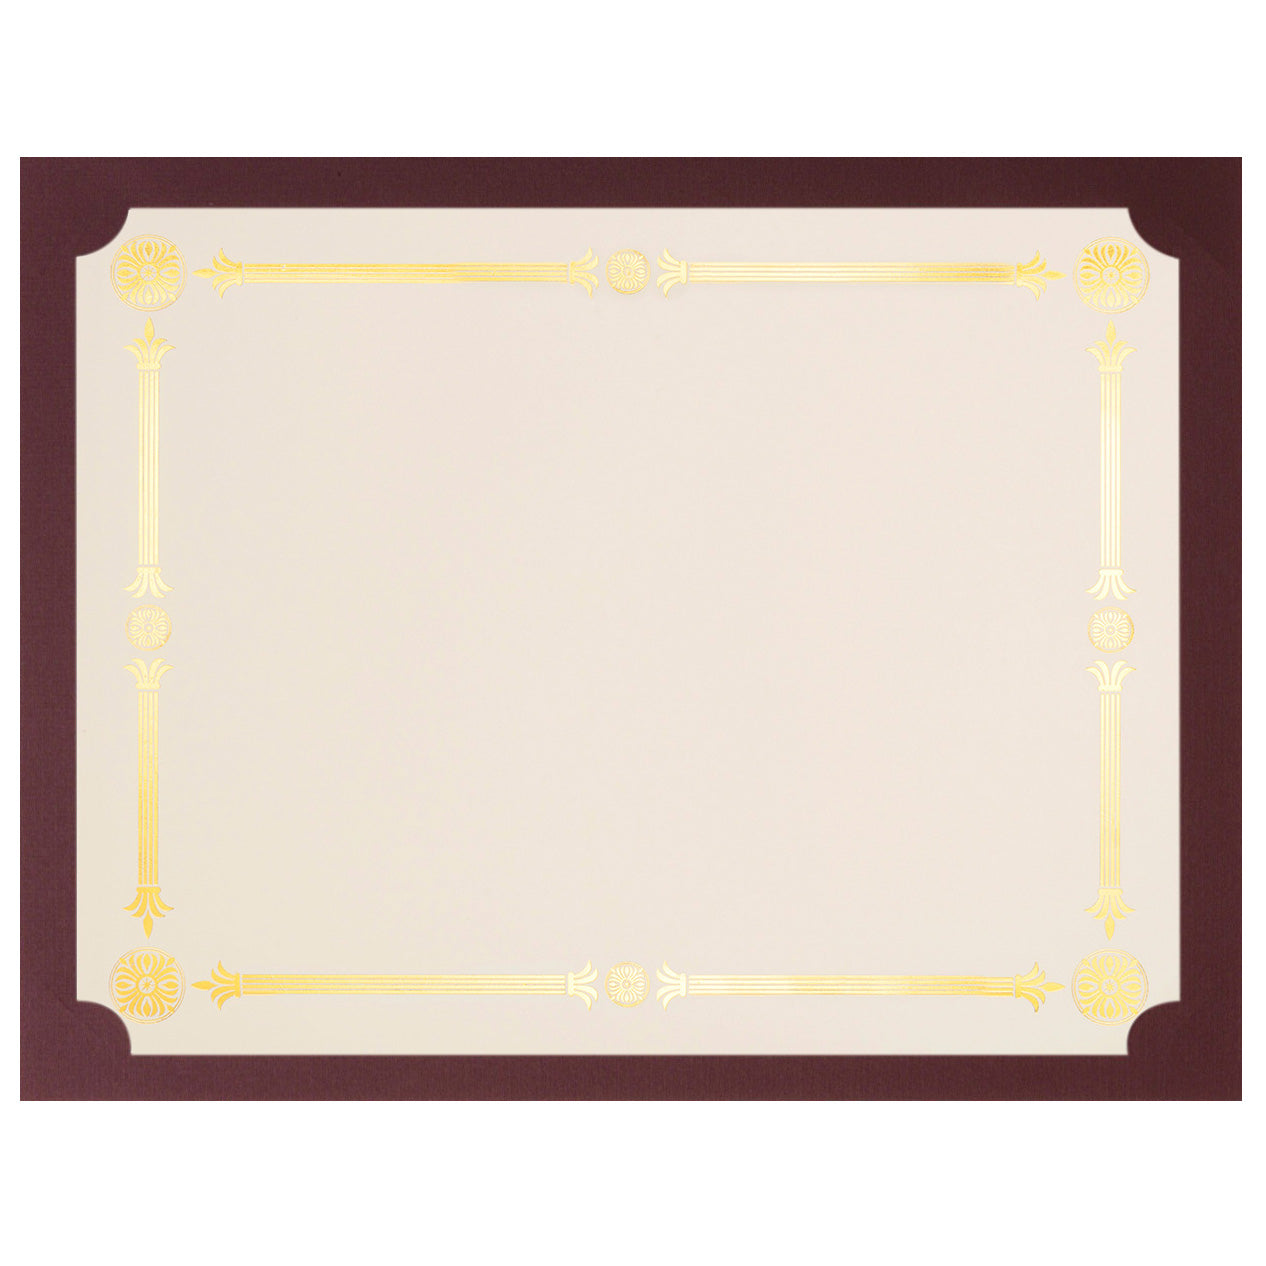 St. James® Presentation Cards/Certificate Holders, Non-Folding, Burgundy Linen, Pack of 25